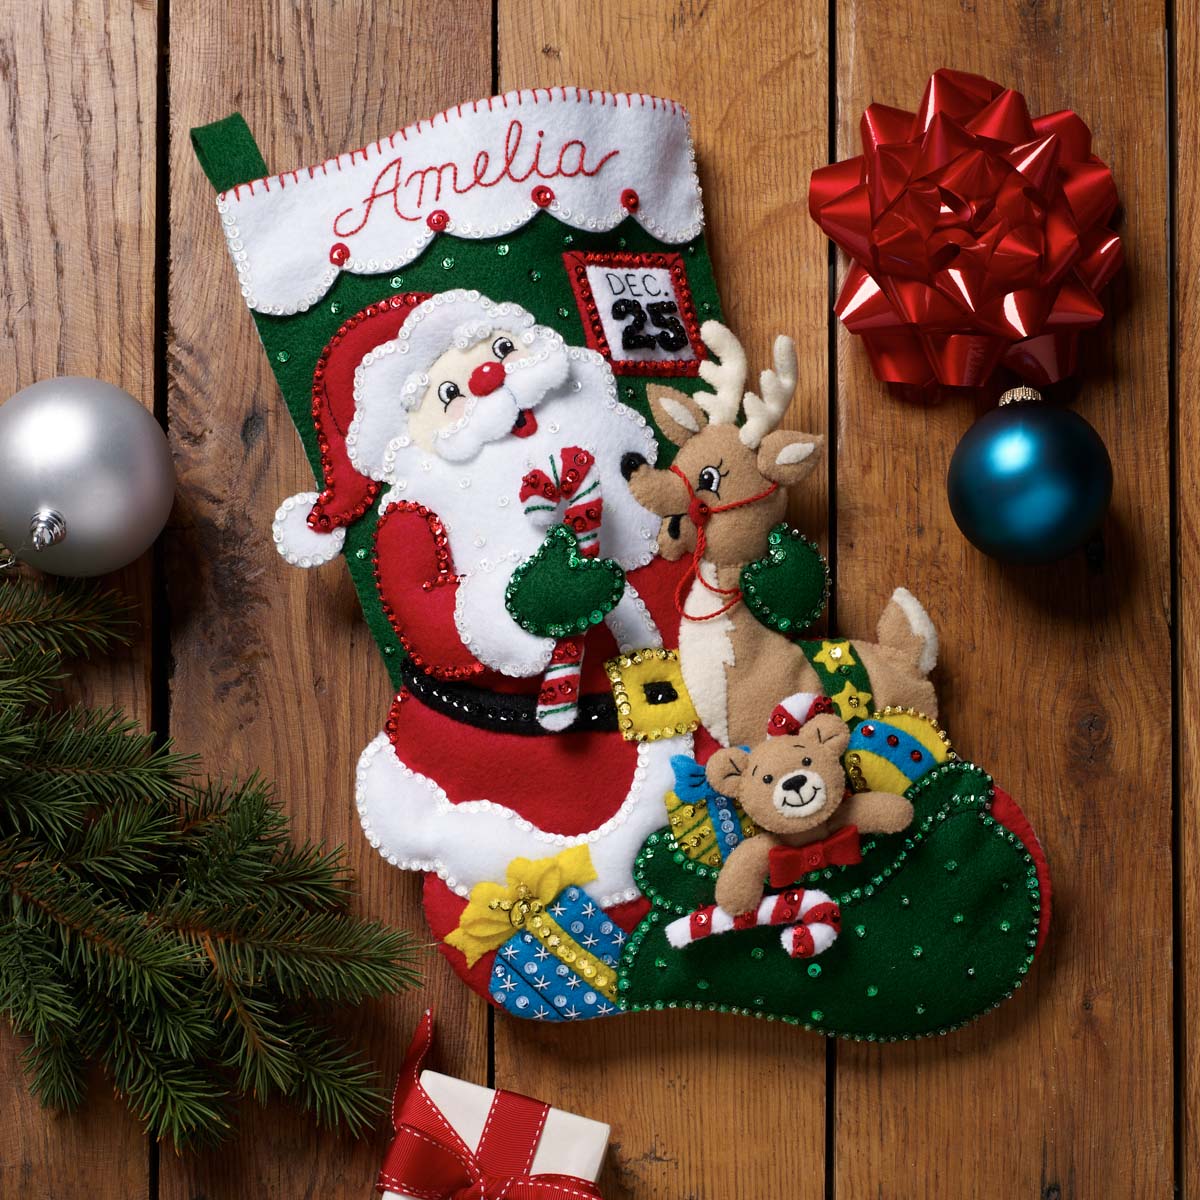 Bucilla ® Seasonal - Felt - Stocking Kits - Santa and Friends - 89330E